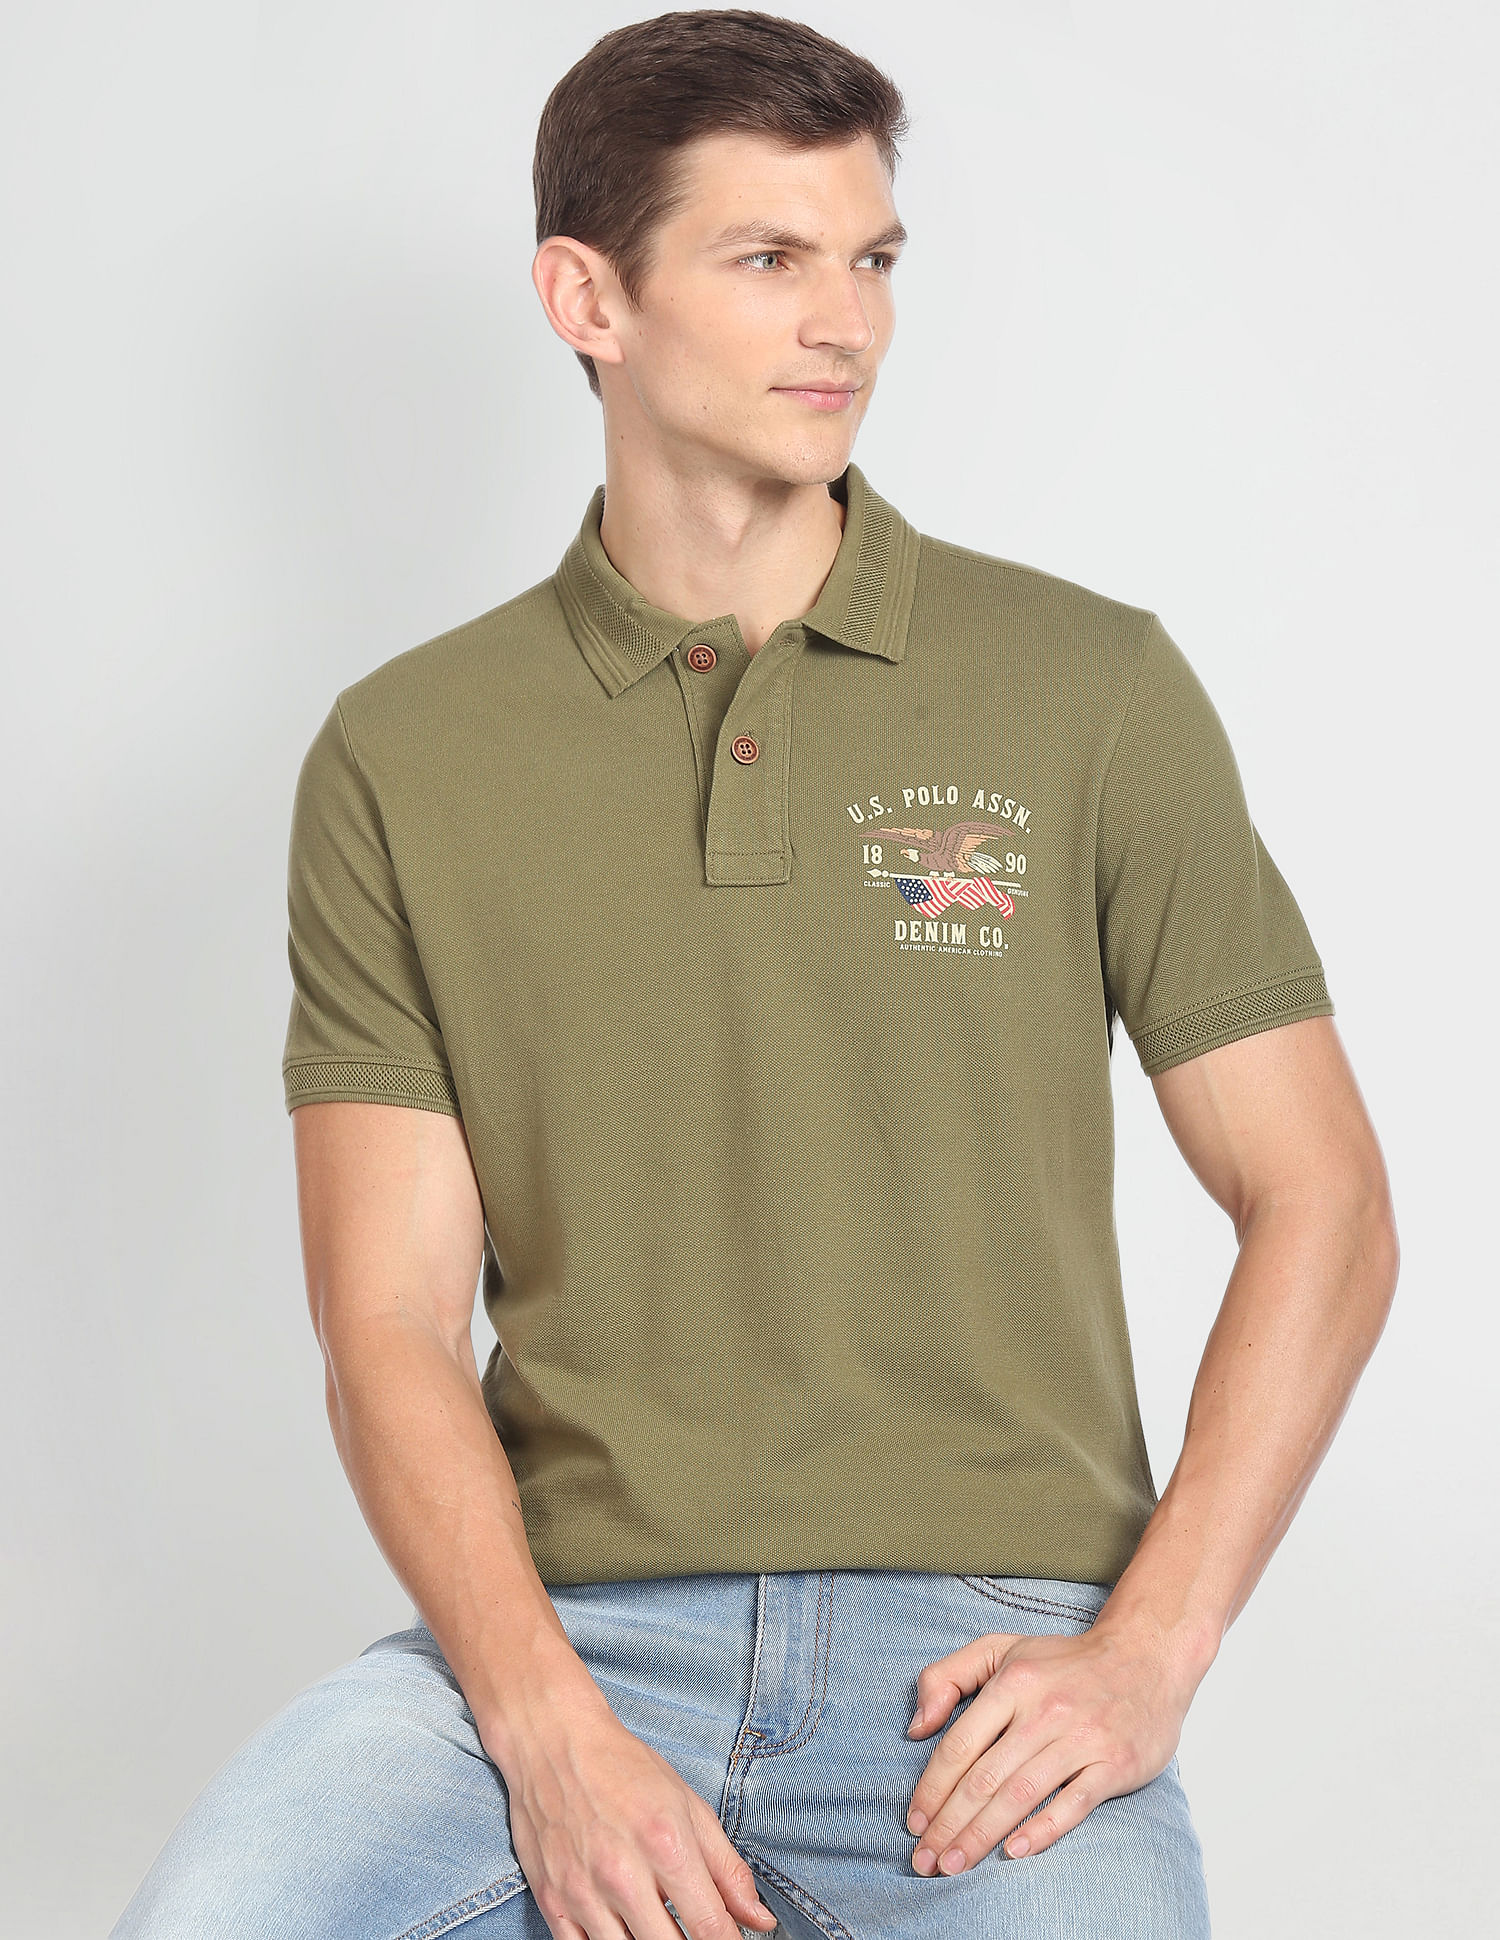 U.S. POLO ASSN. T-Shirts : Buy U.S. POLO ASSN. Mandarin Collar Luxury T- Shirt Online